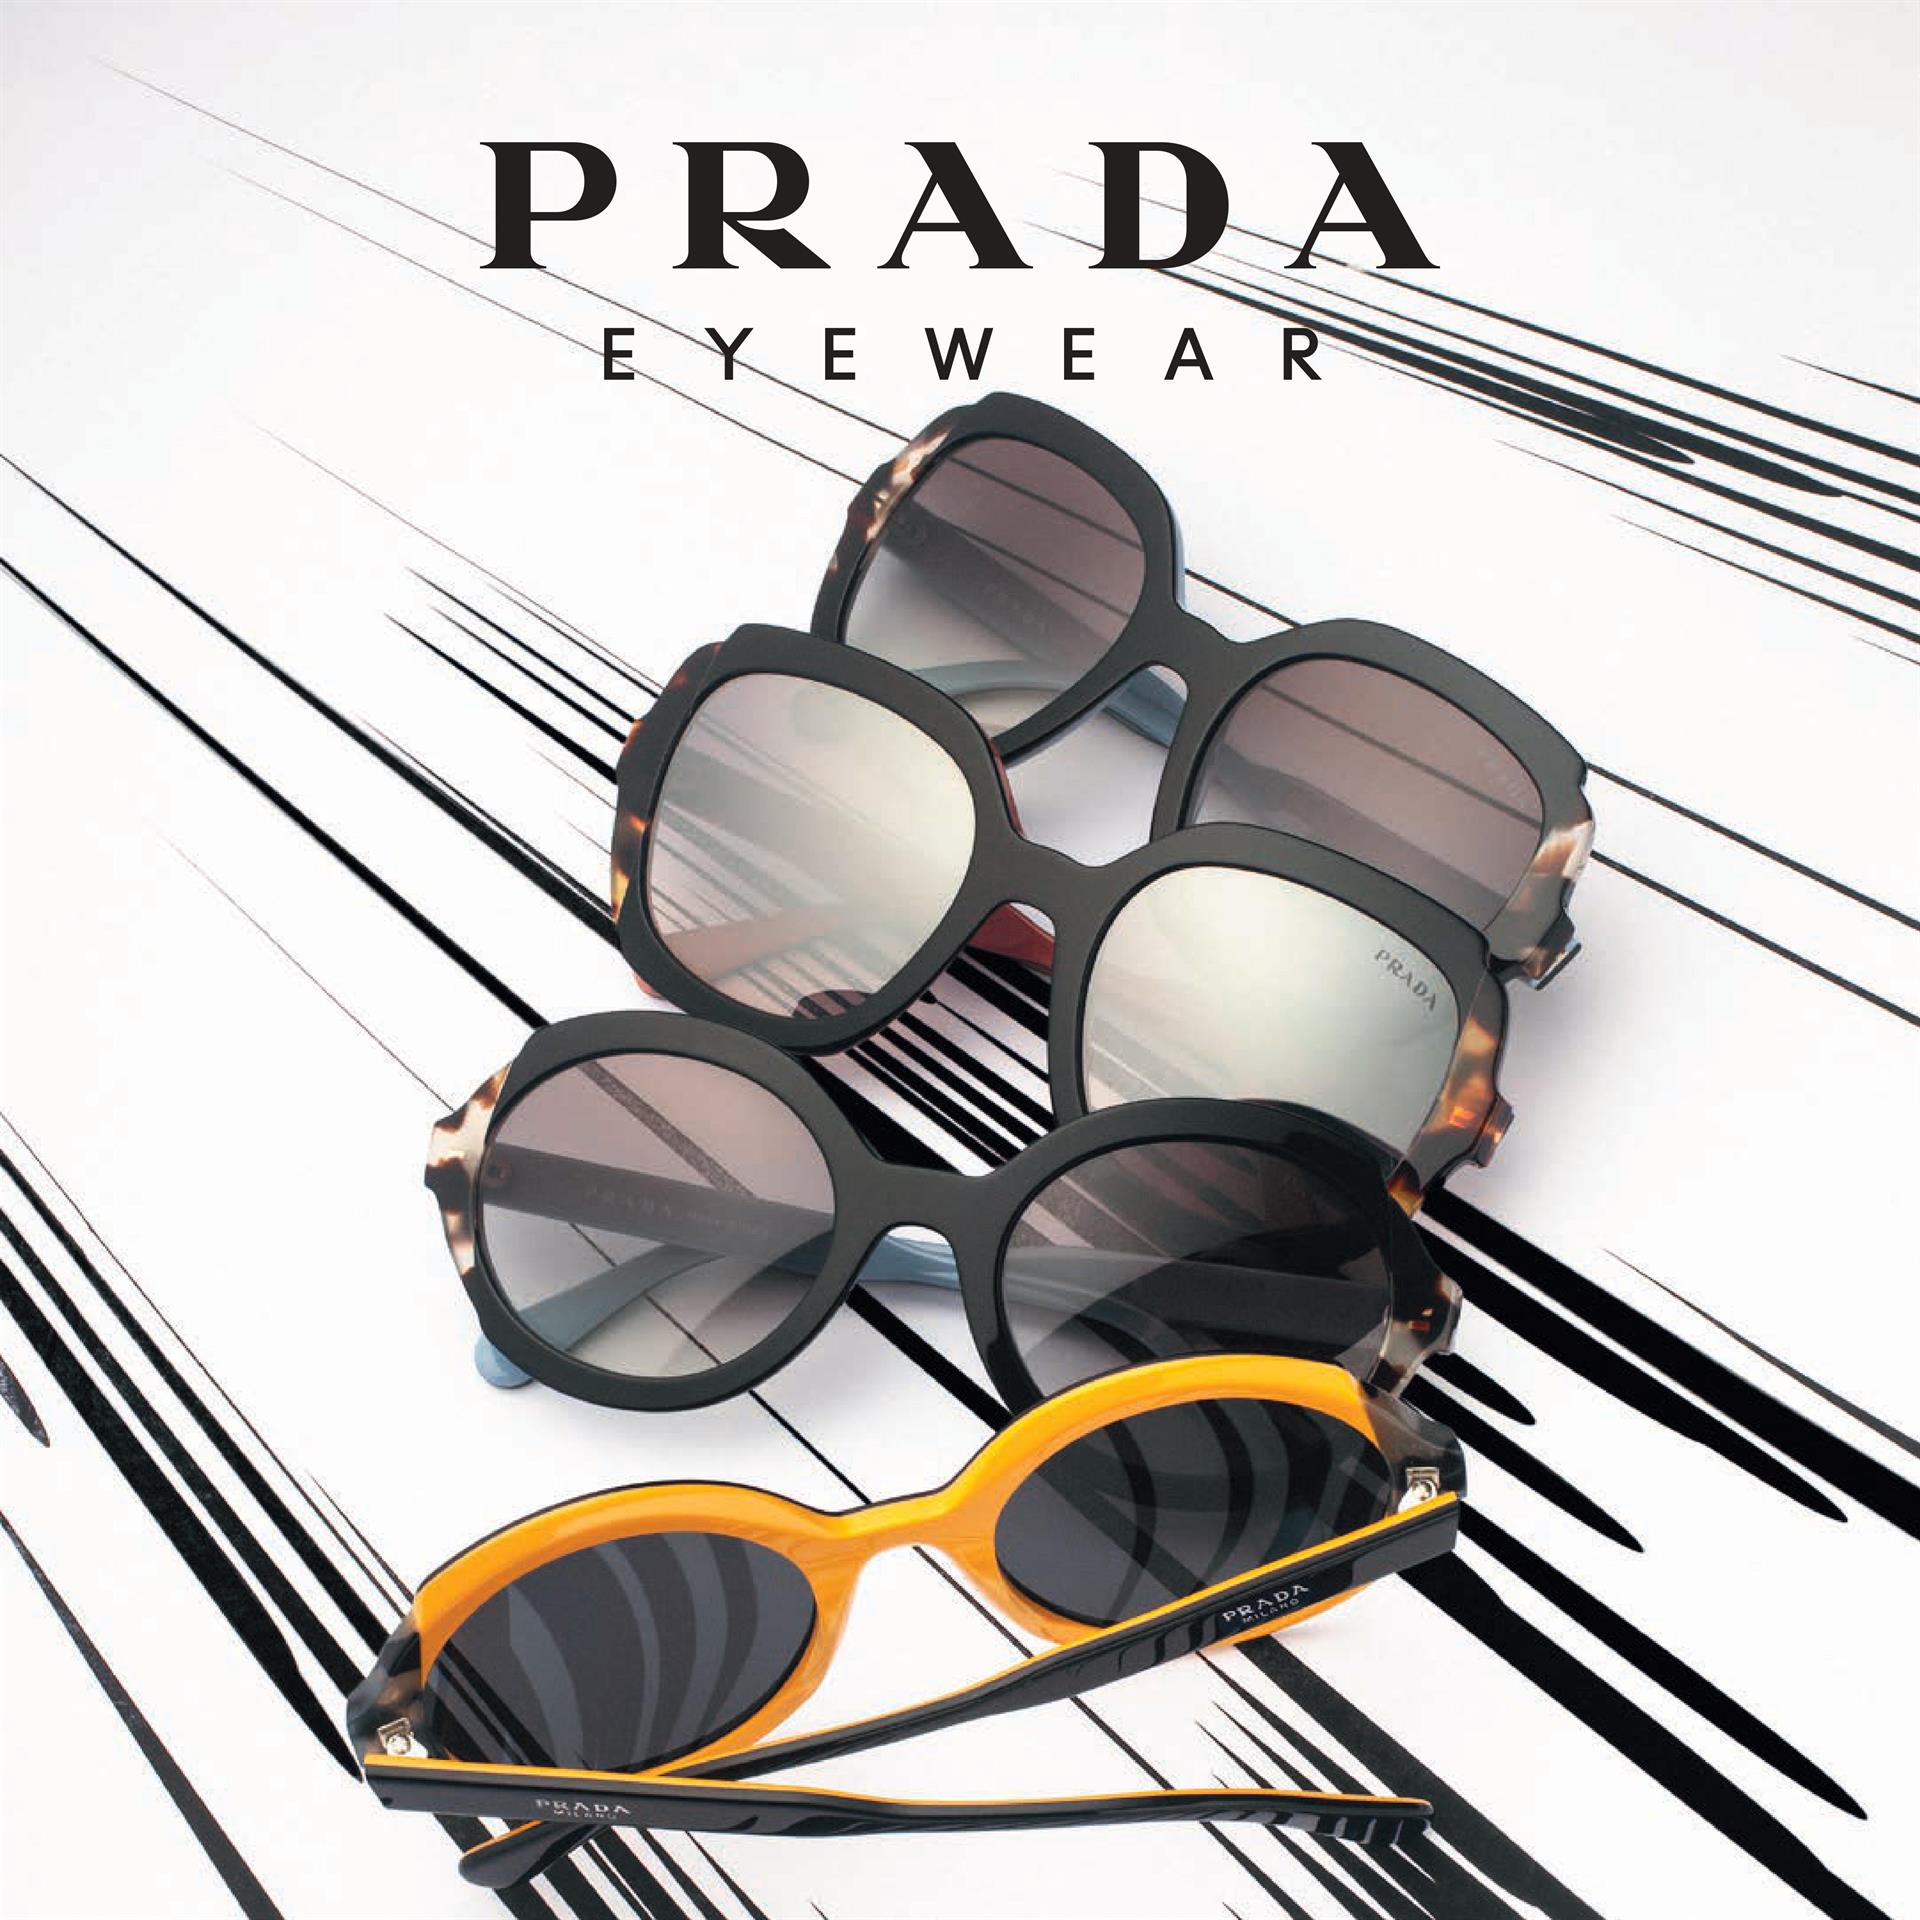 Collezione Eyewear Prada Etiquette | Ottica Barile